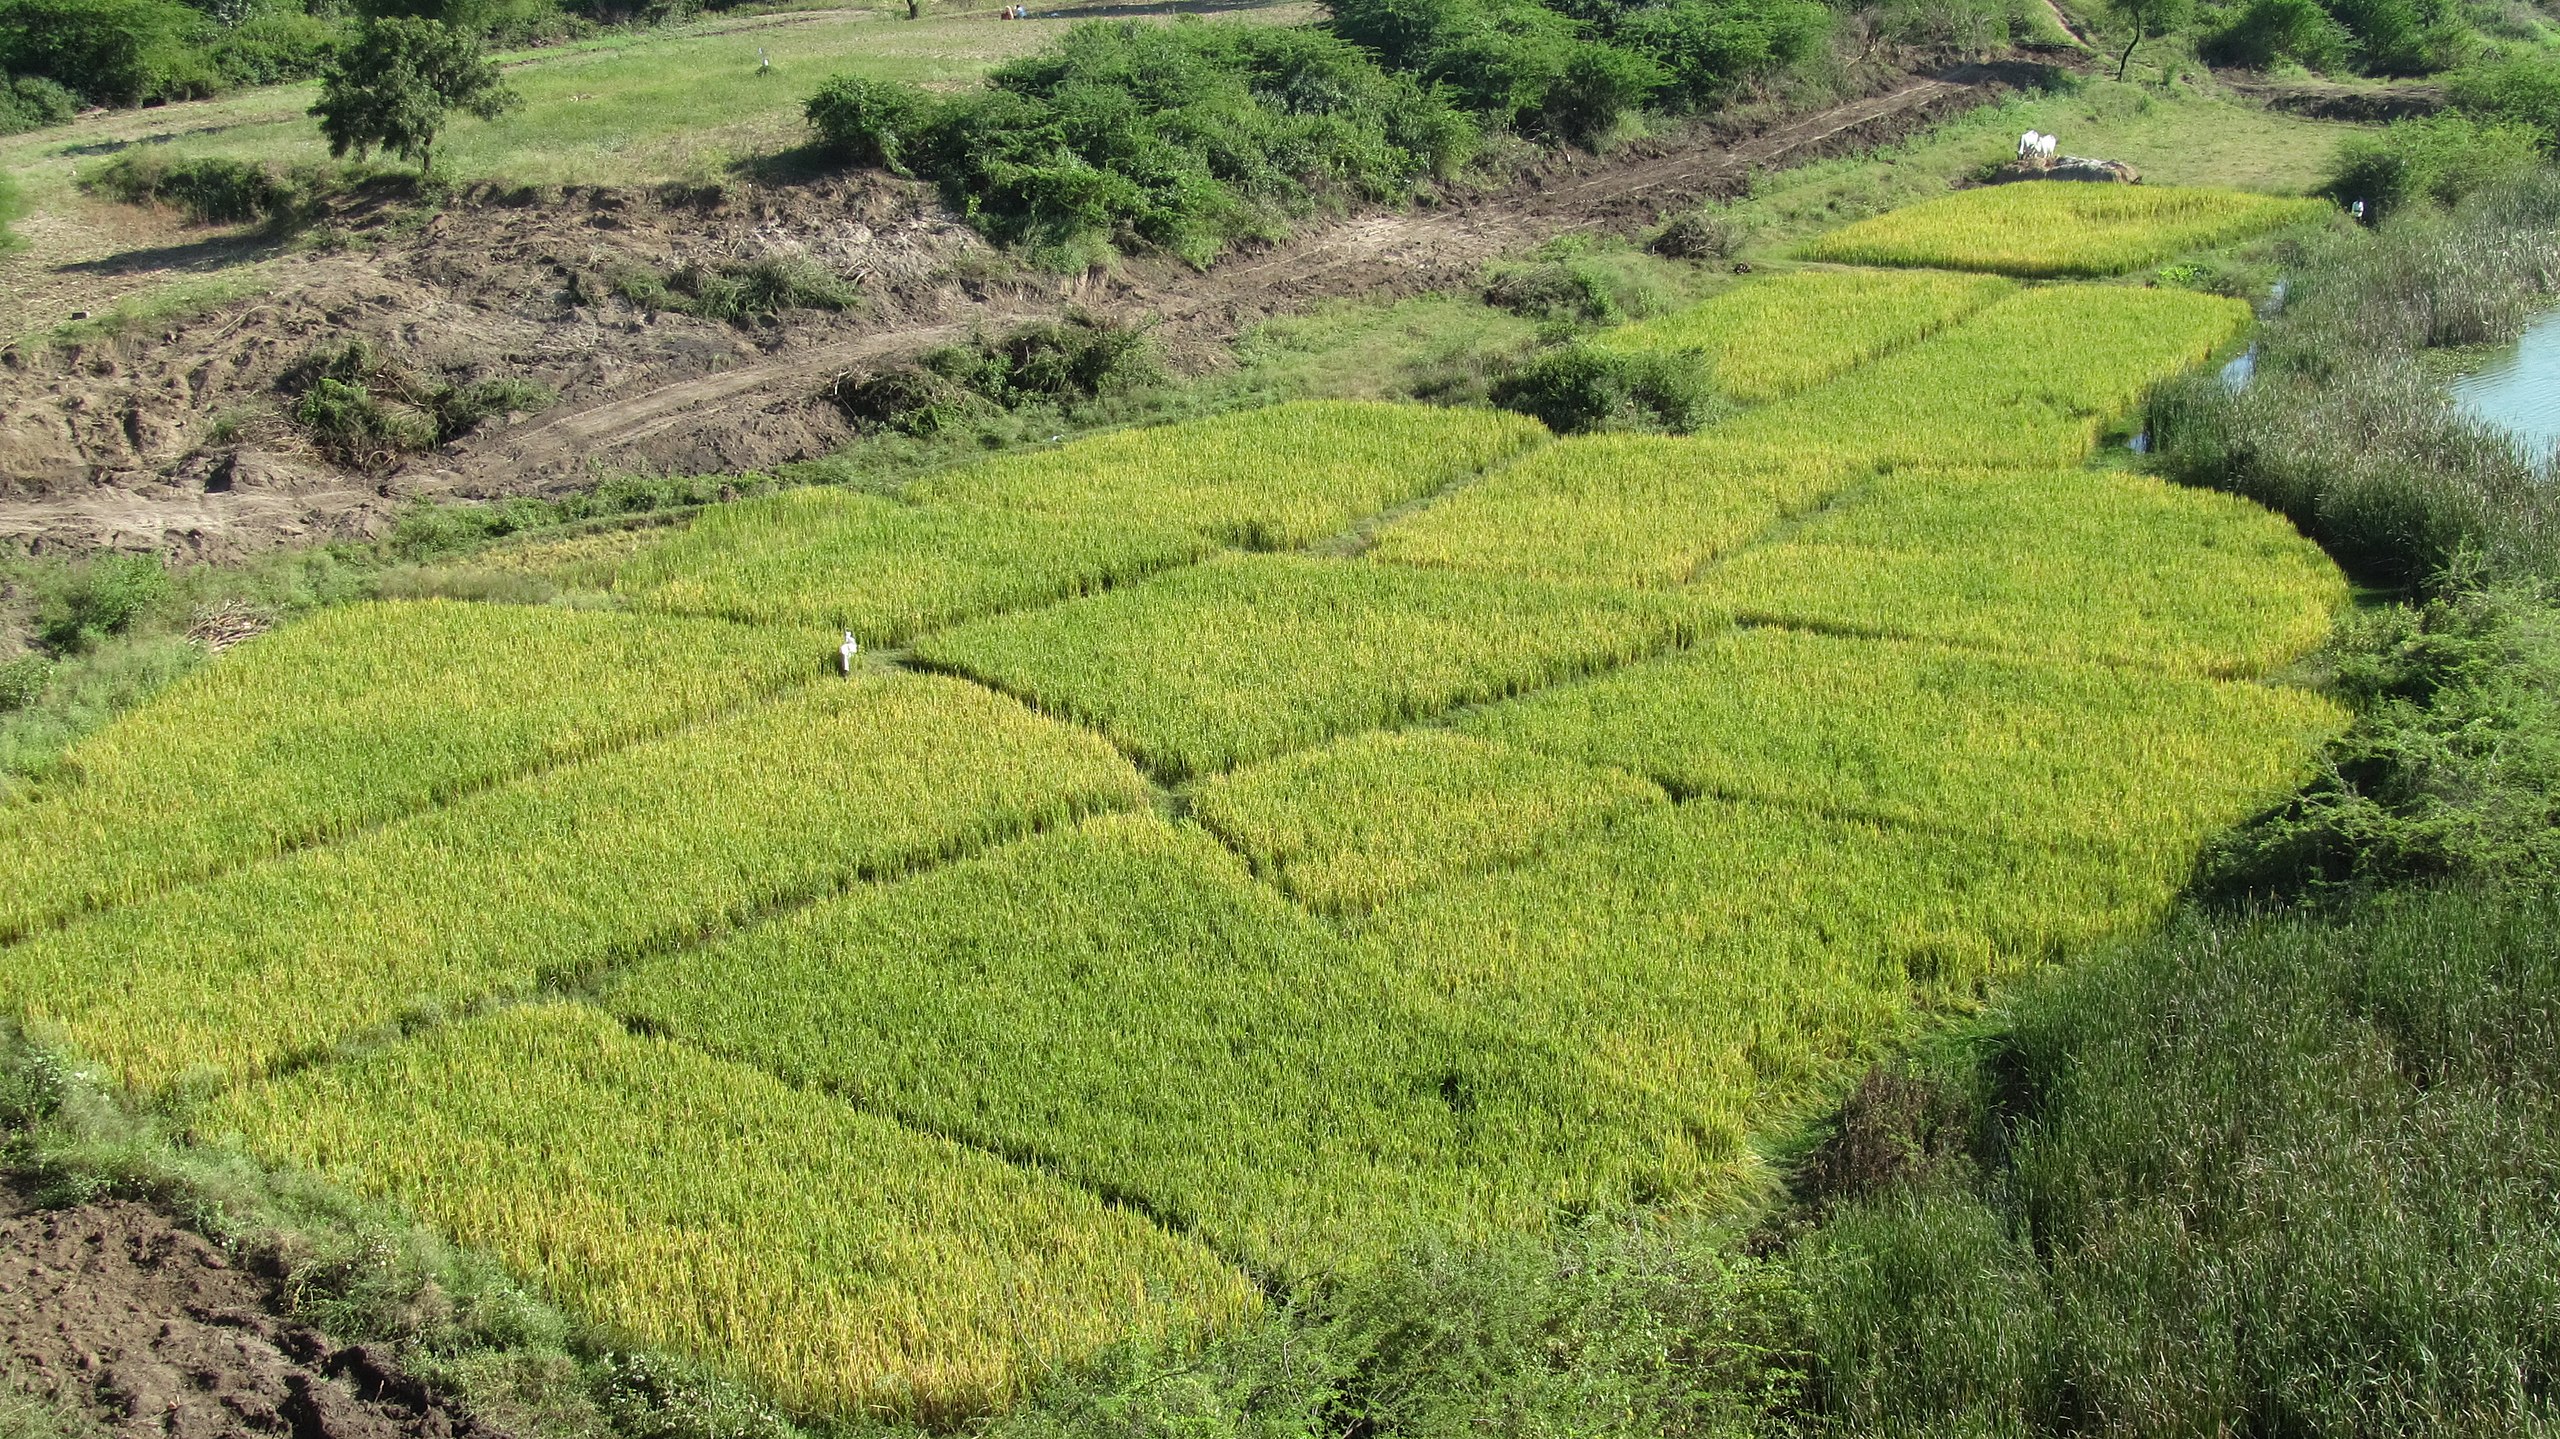 A farm in Warangal (Image Source: Manoj K via Wikimedia Commons)